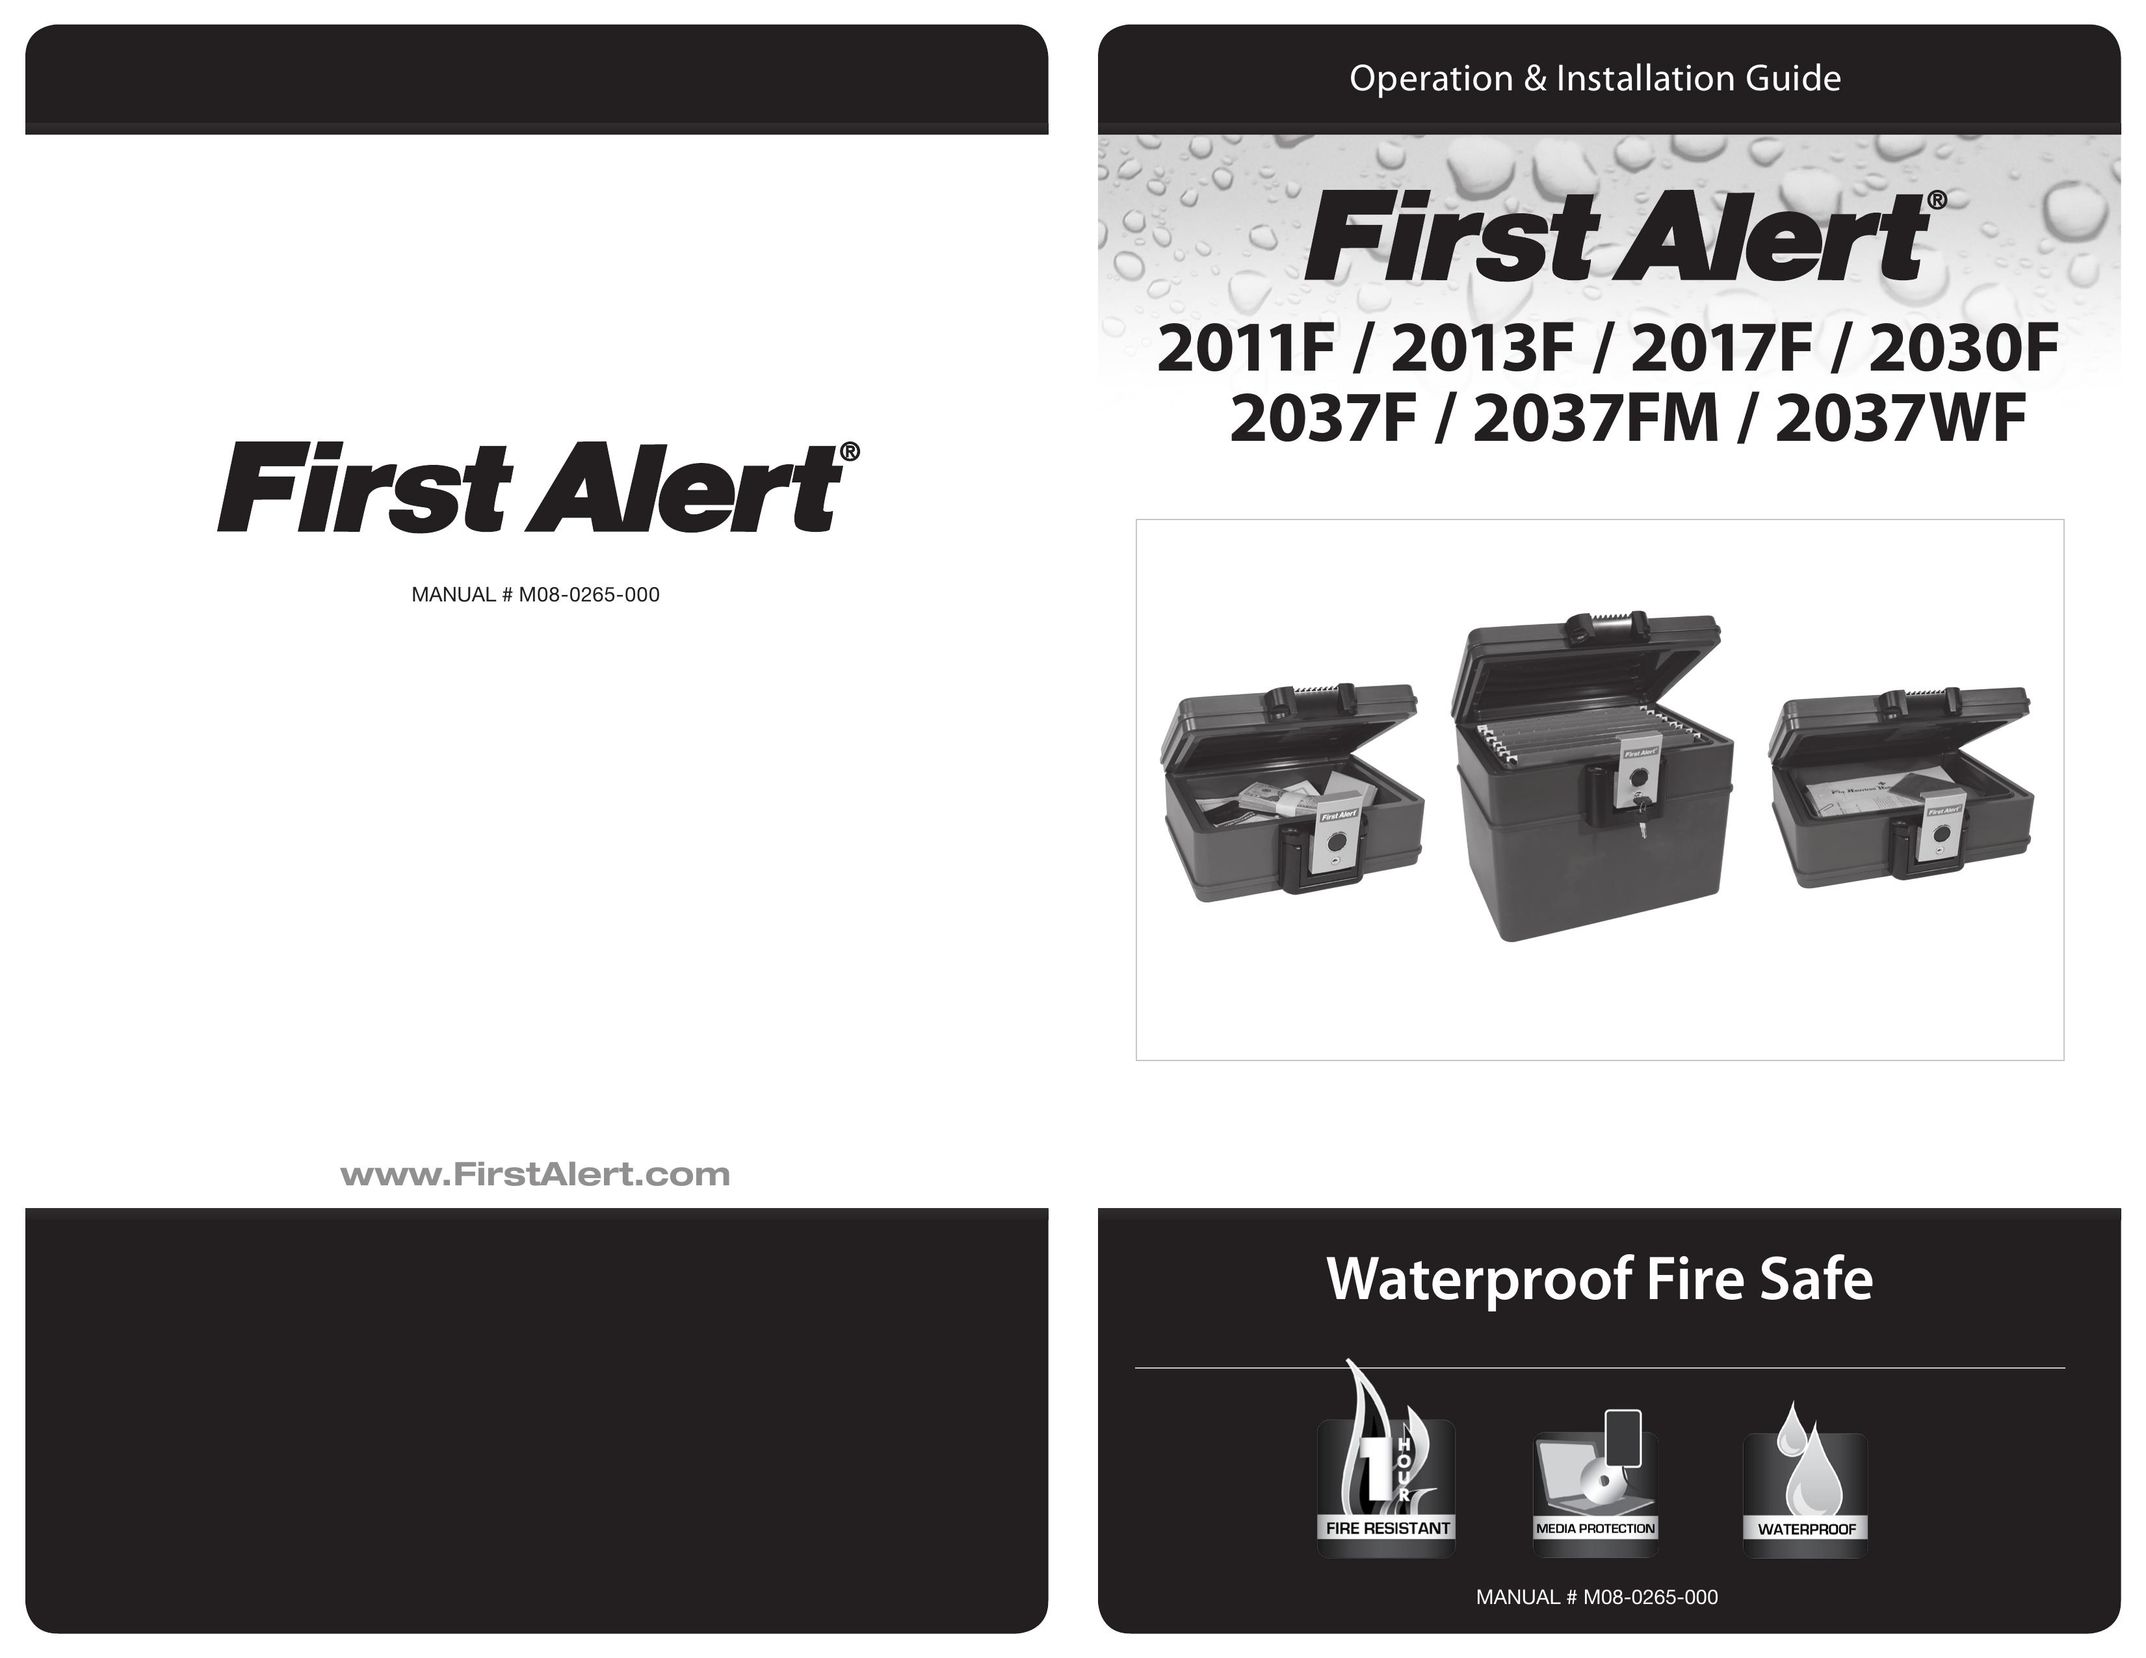 First Alert 2037F Portable Media Storage User Manual